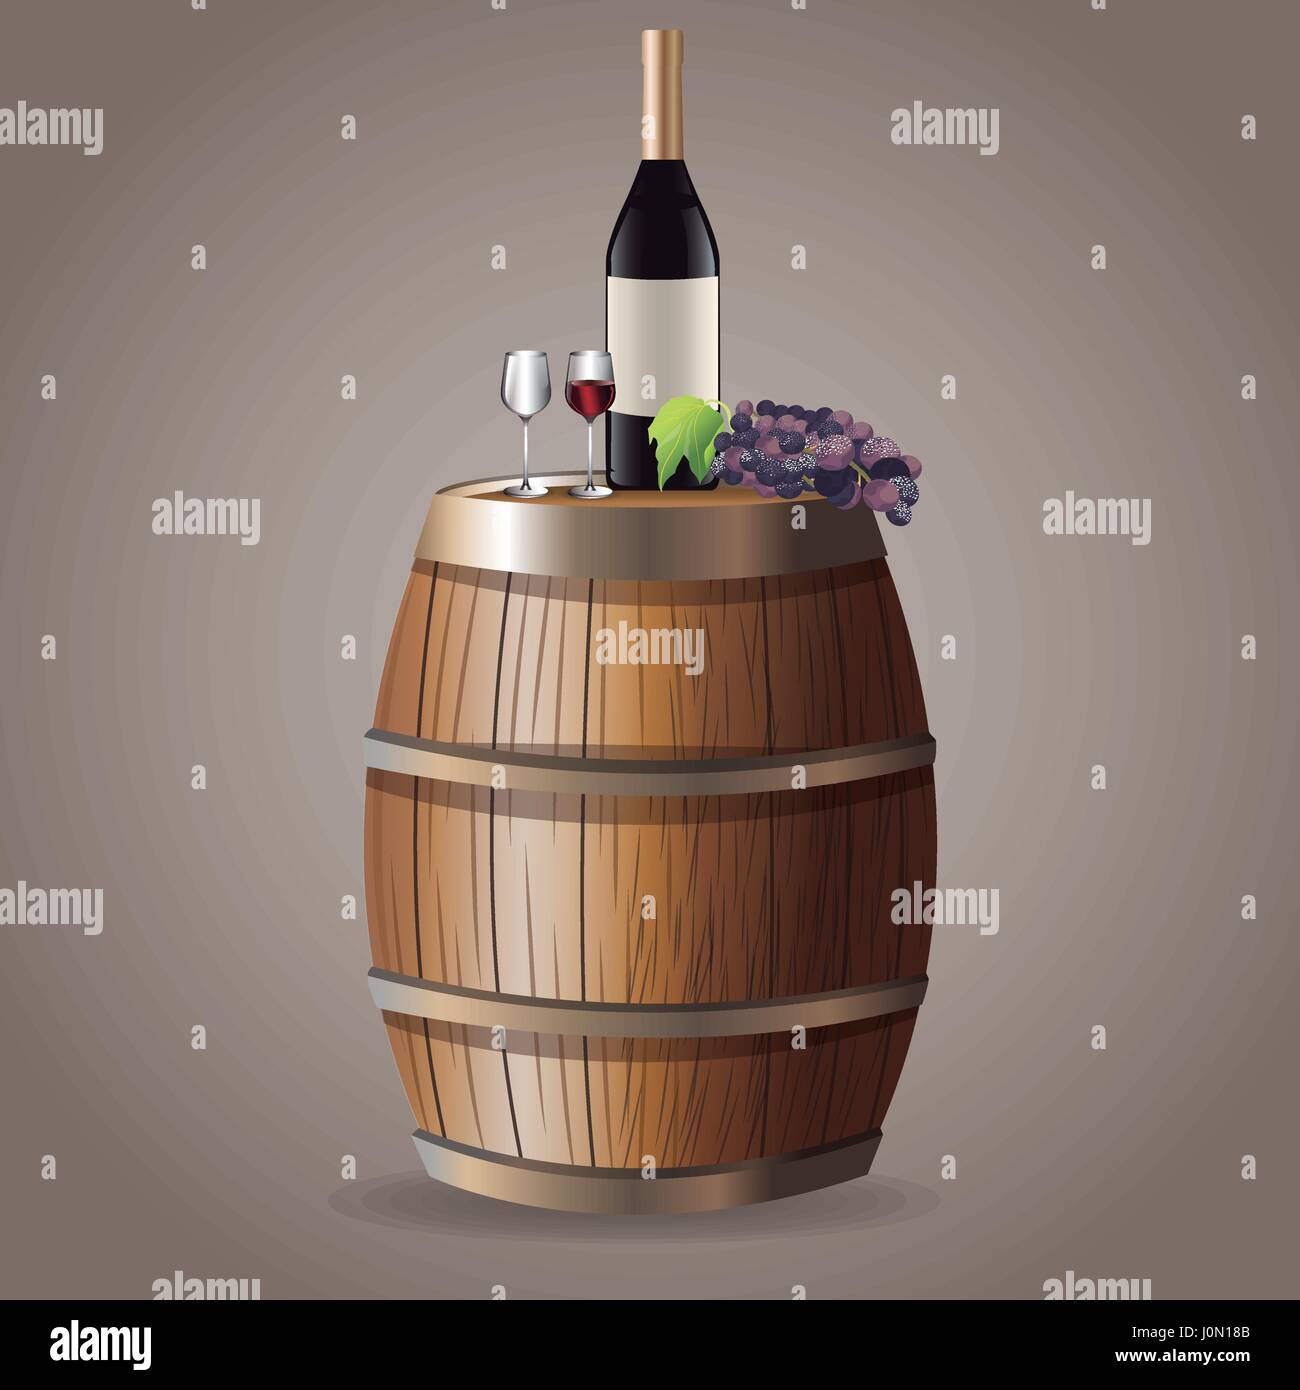 bottle wine drink barrel grape image Stock Vector